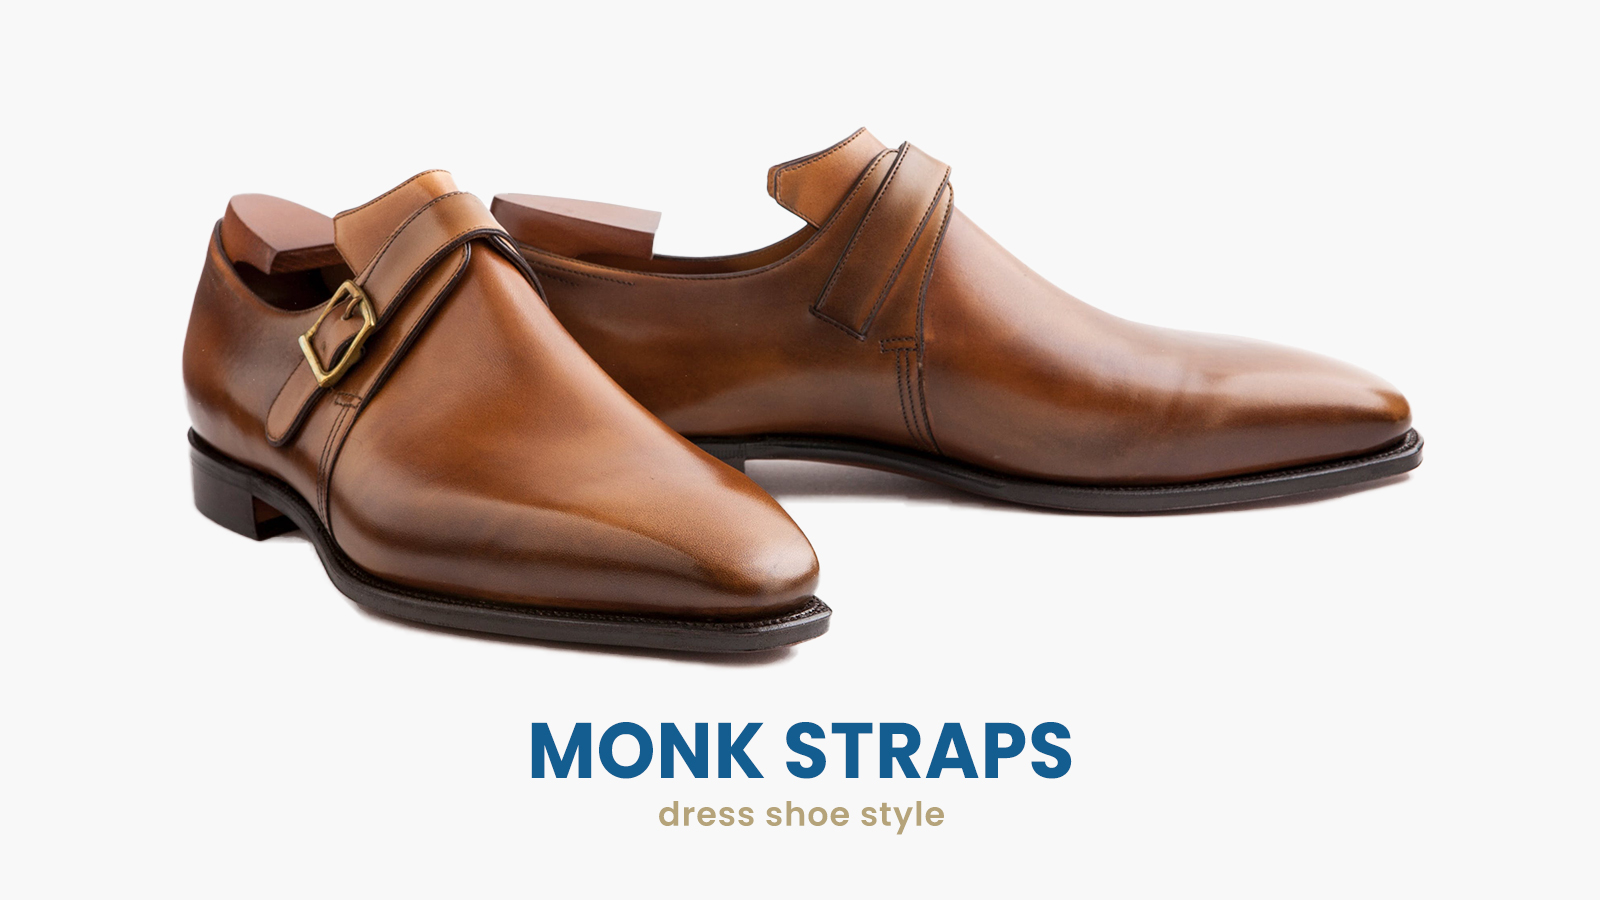 monk straps dress shoes style